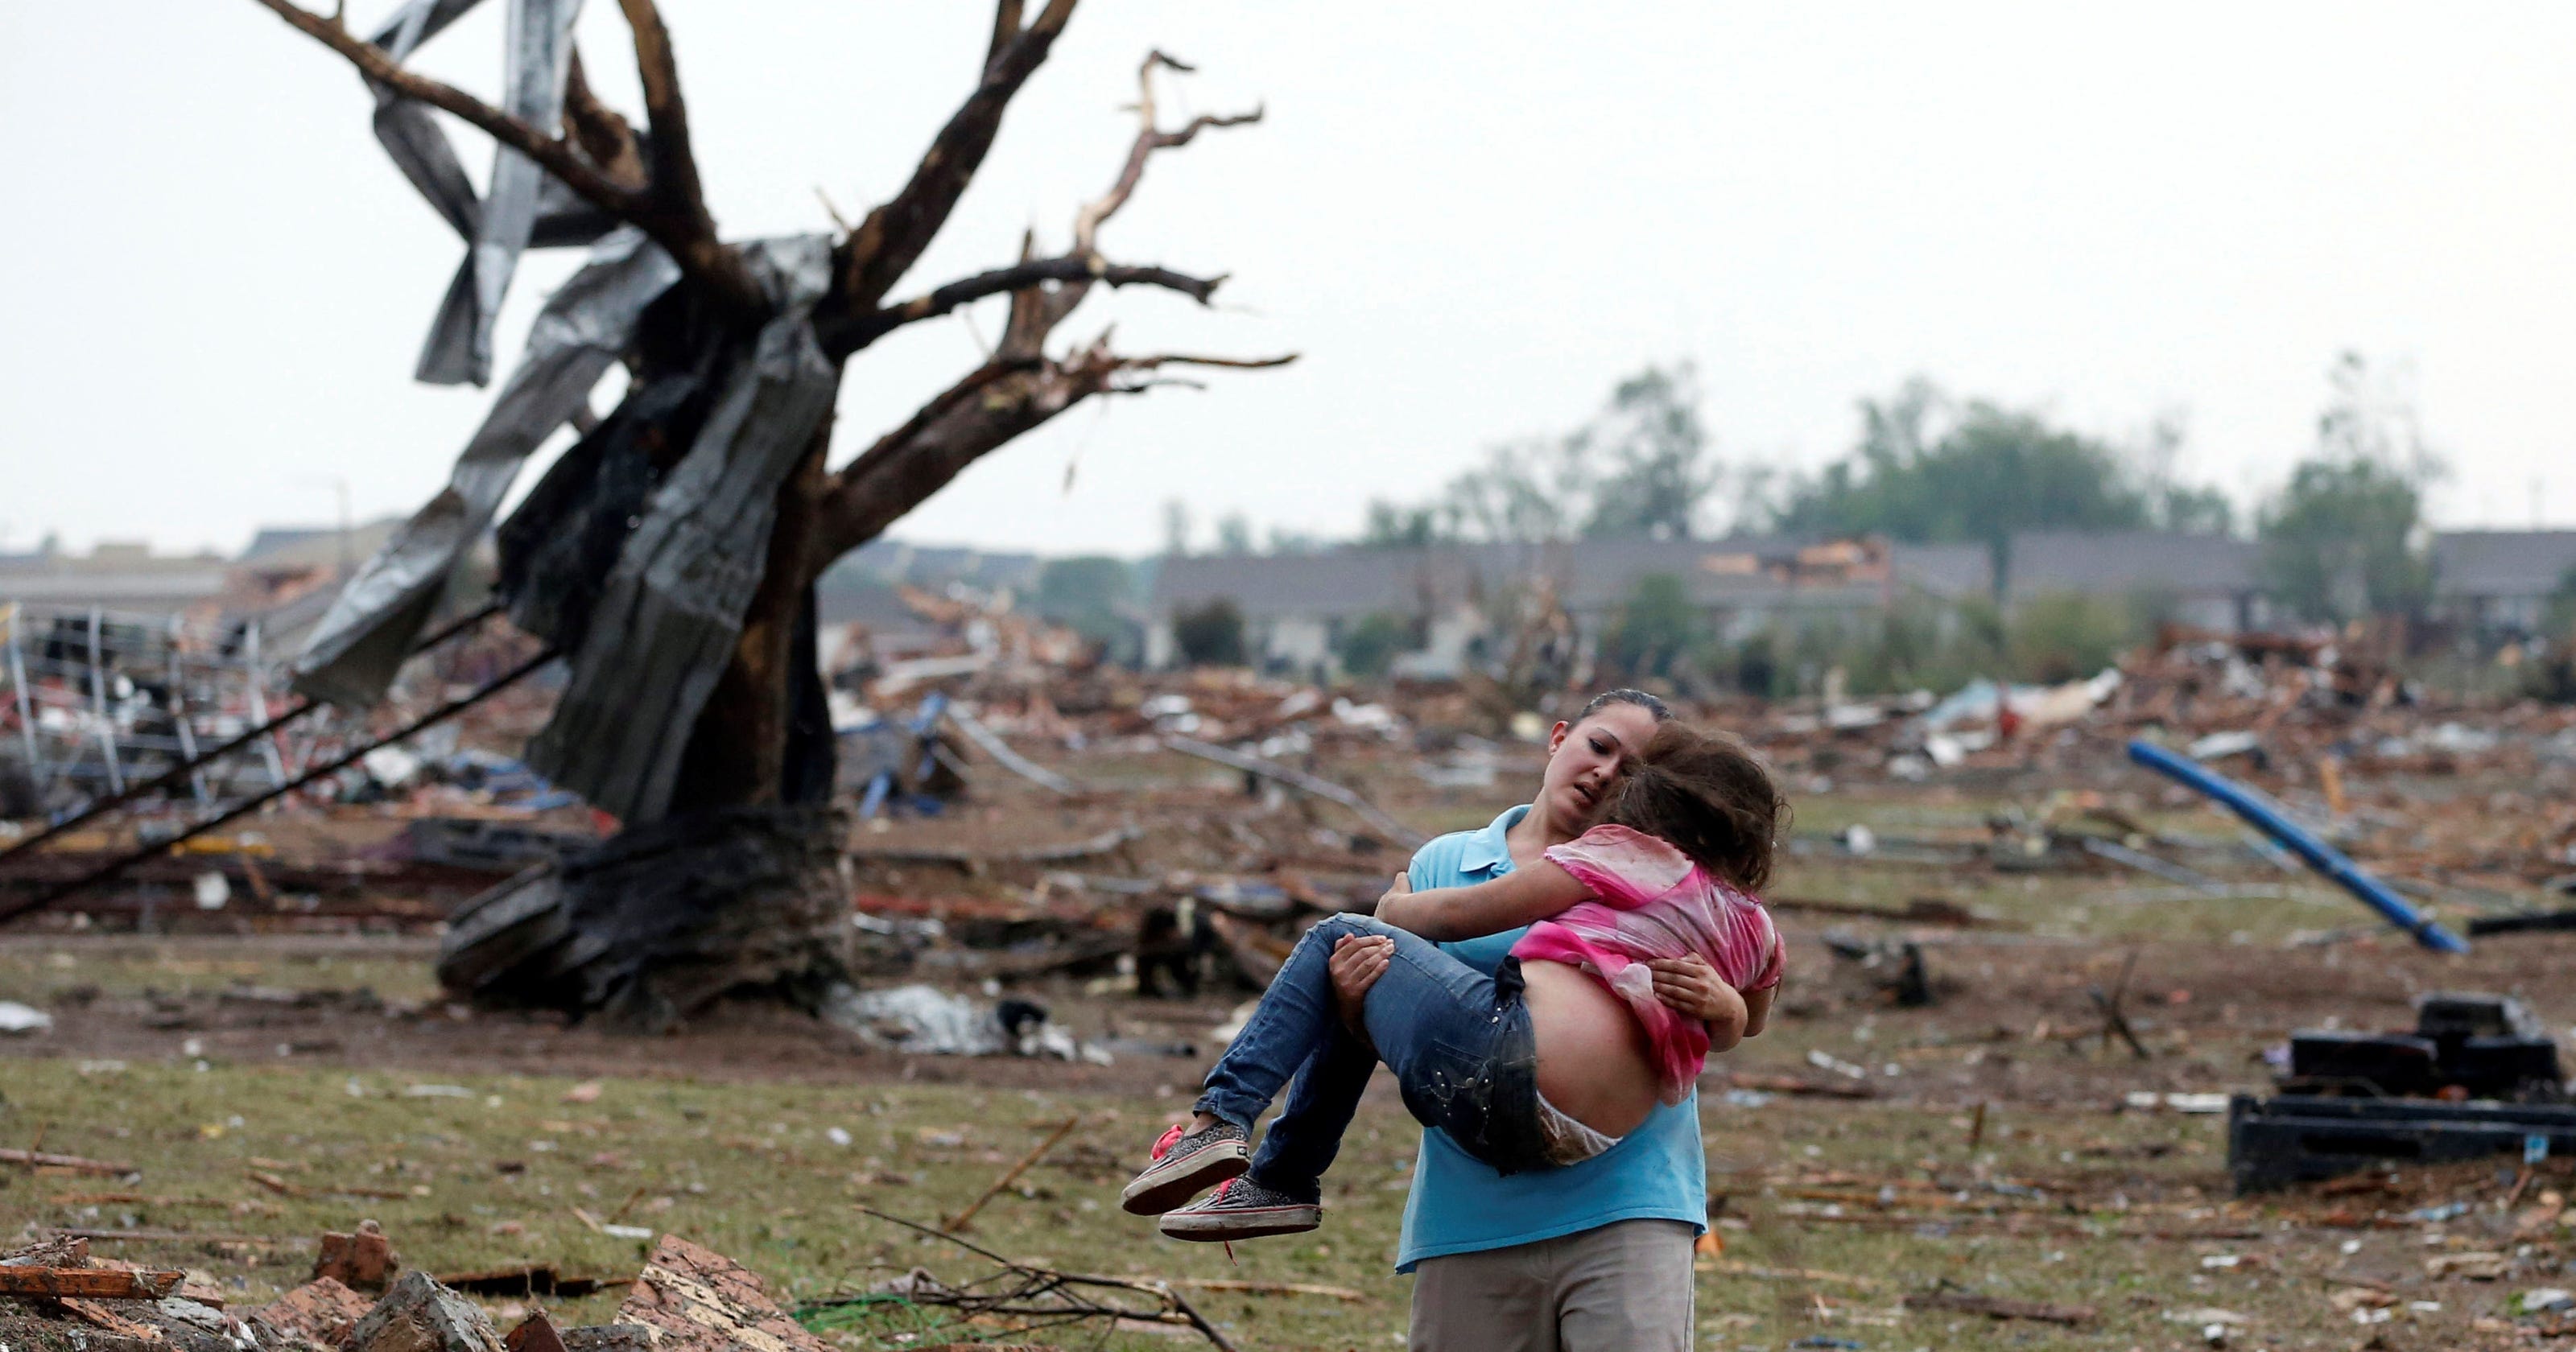 How to help Oklahoma tornado victims